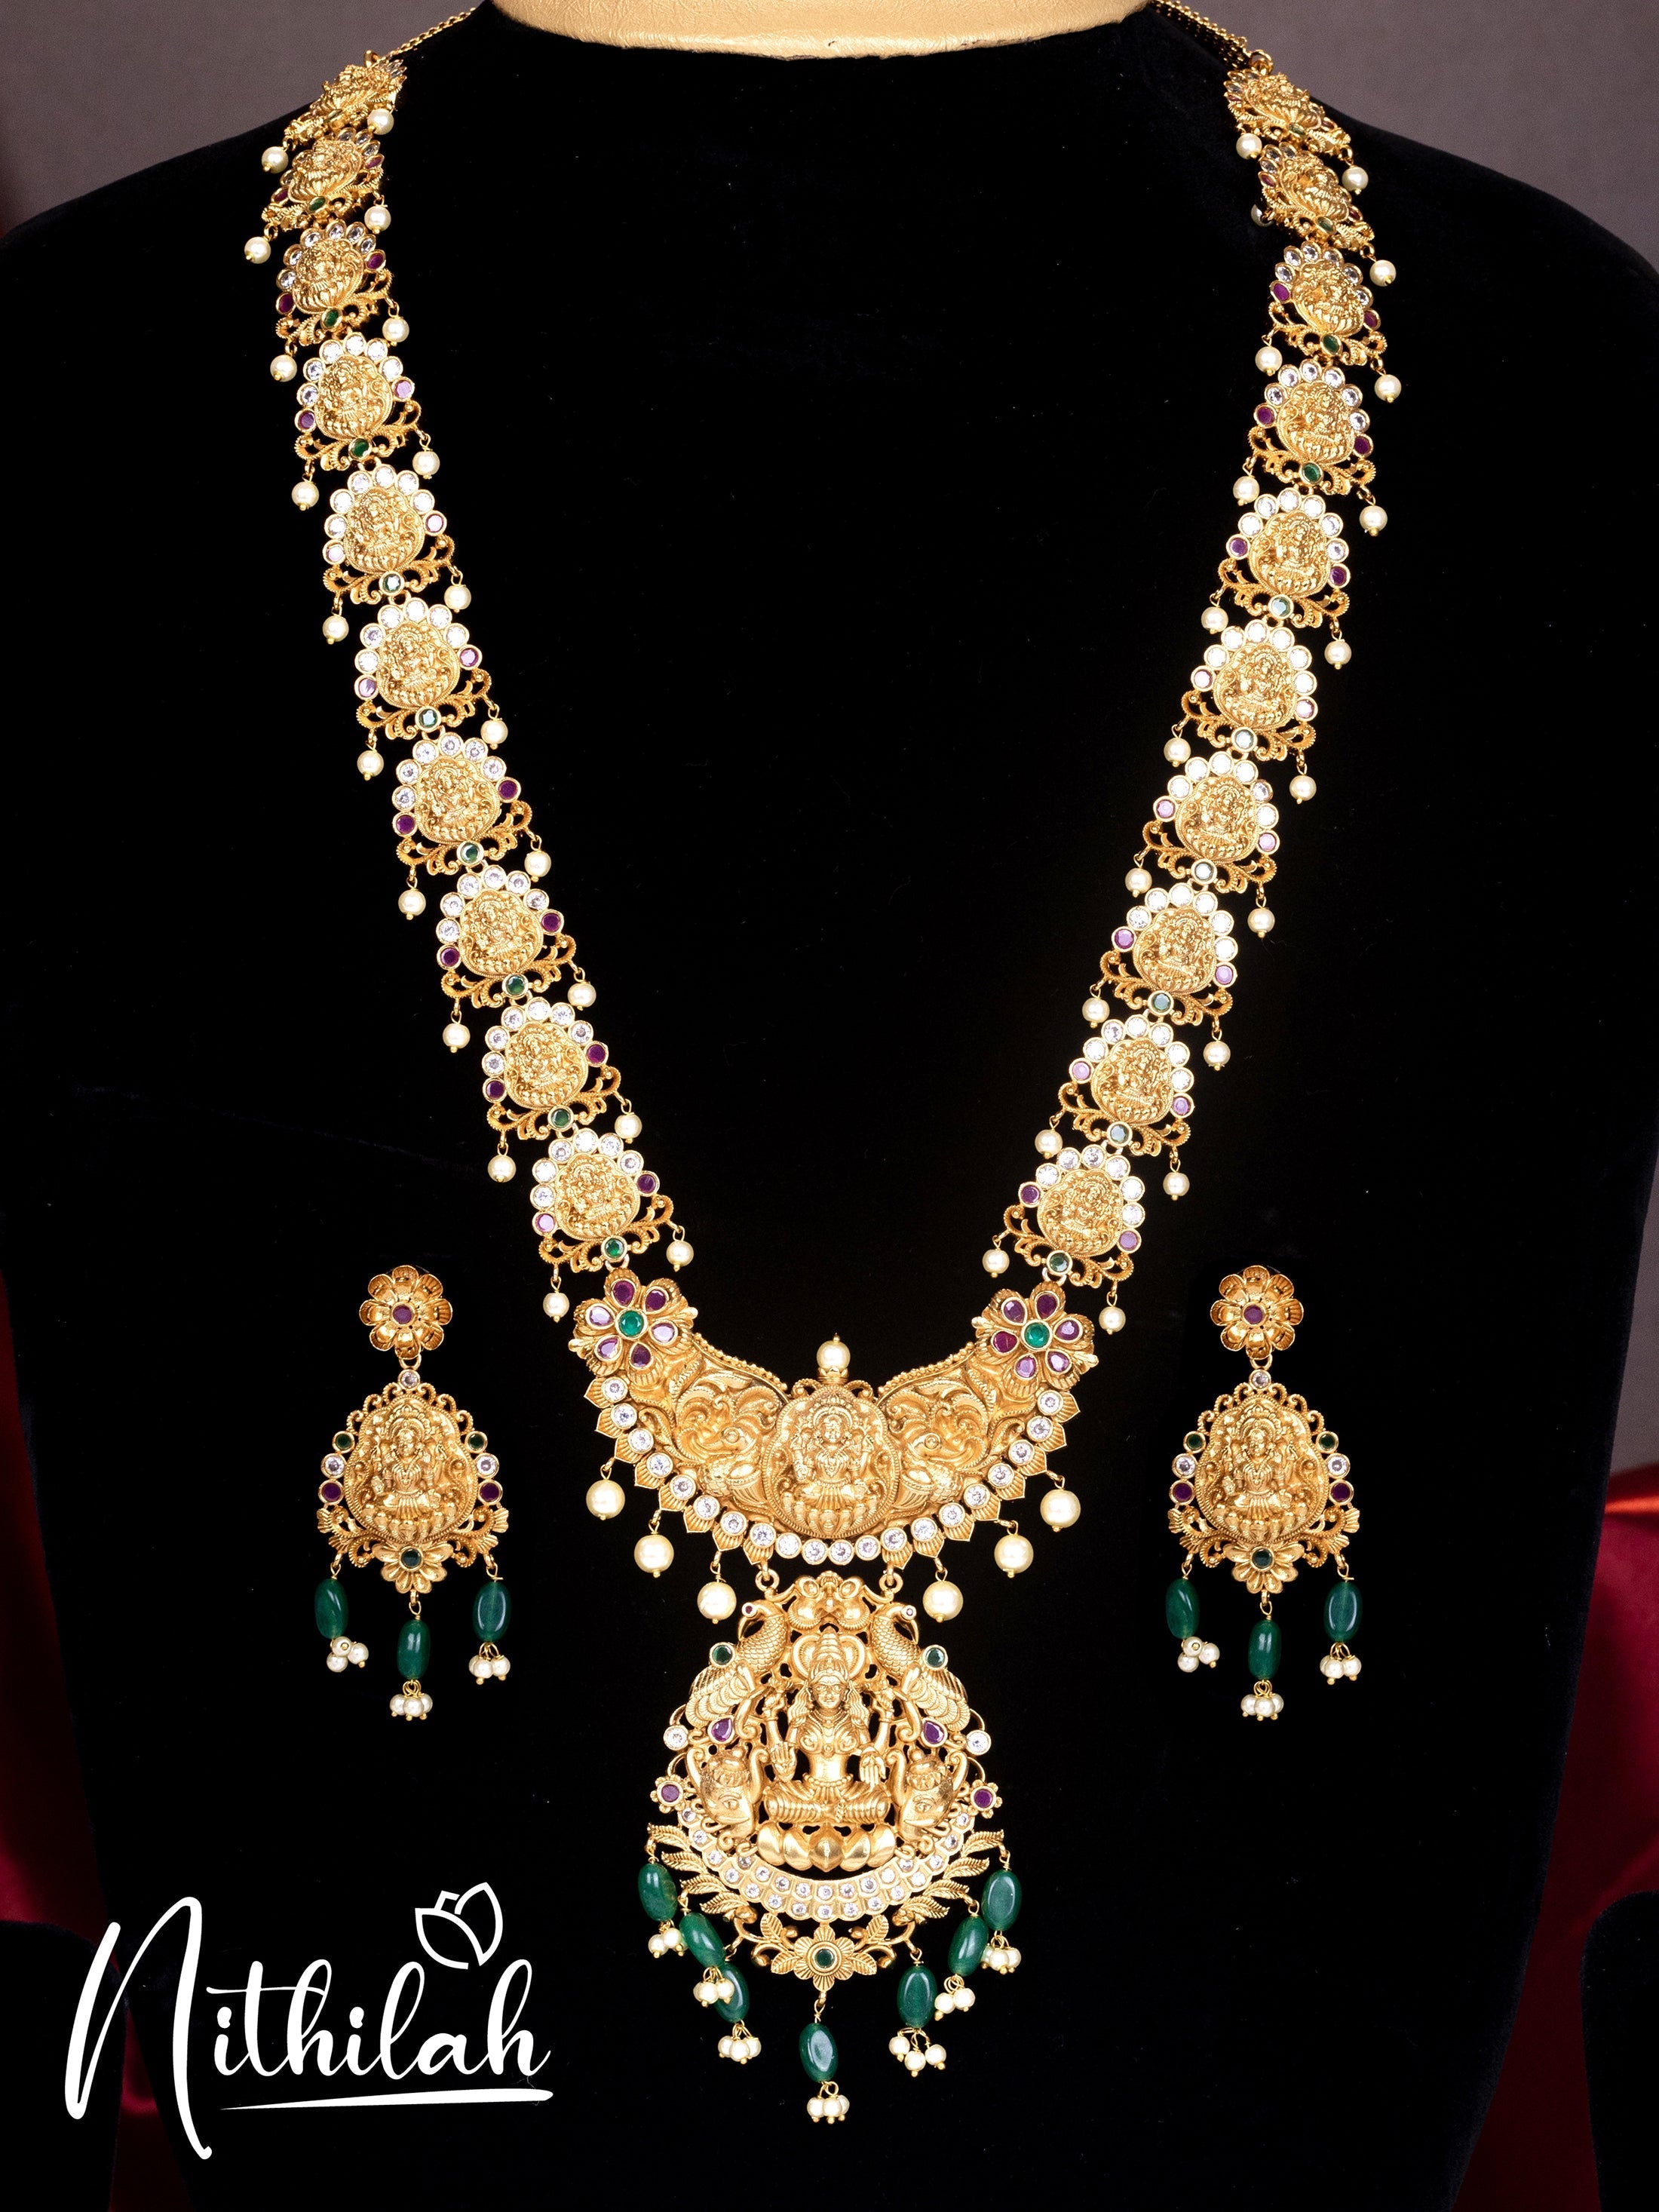 Nithilah One Gram Gold Lakshmi Chain with AD Haram